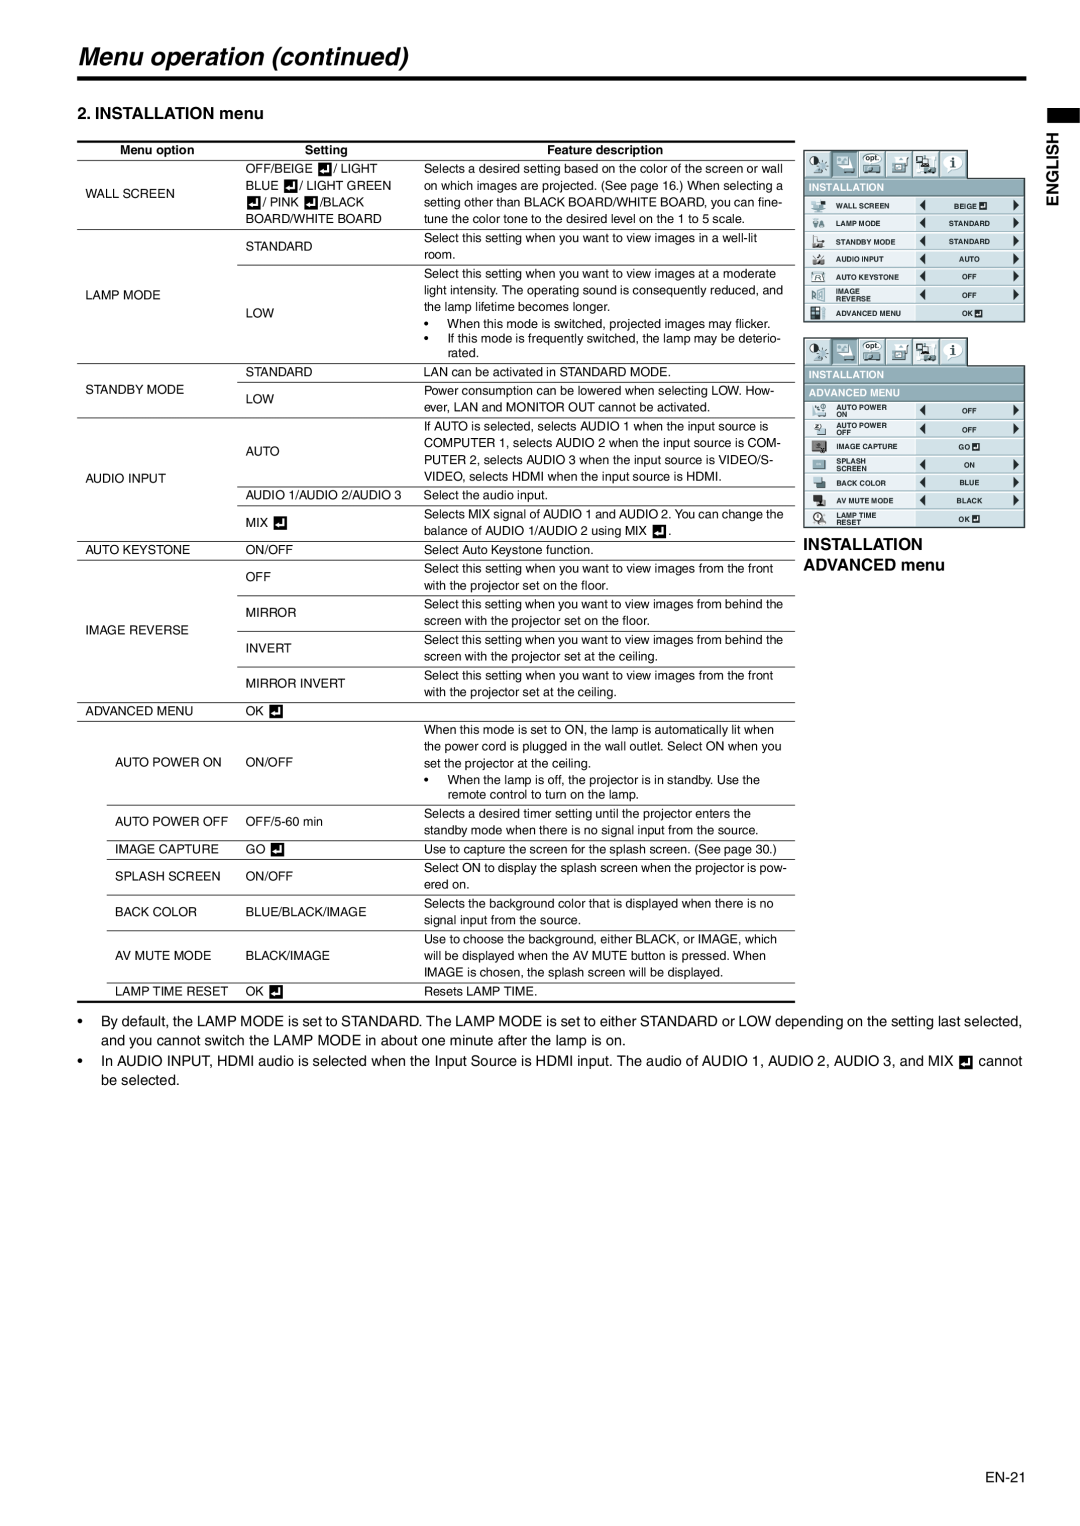 Mitsubishi Electronics XD250U-G INSTALLATION menu, Installation, ADVANCED menu, Menu operation continued, English 